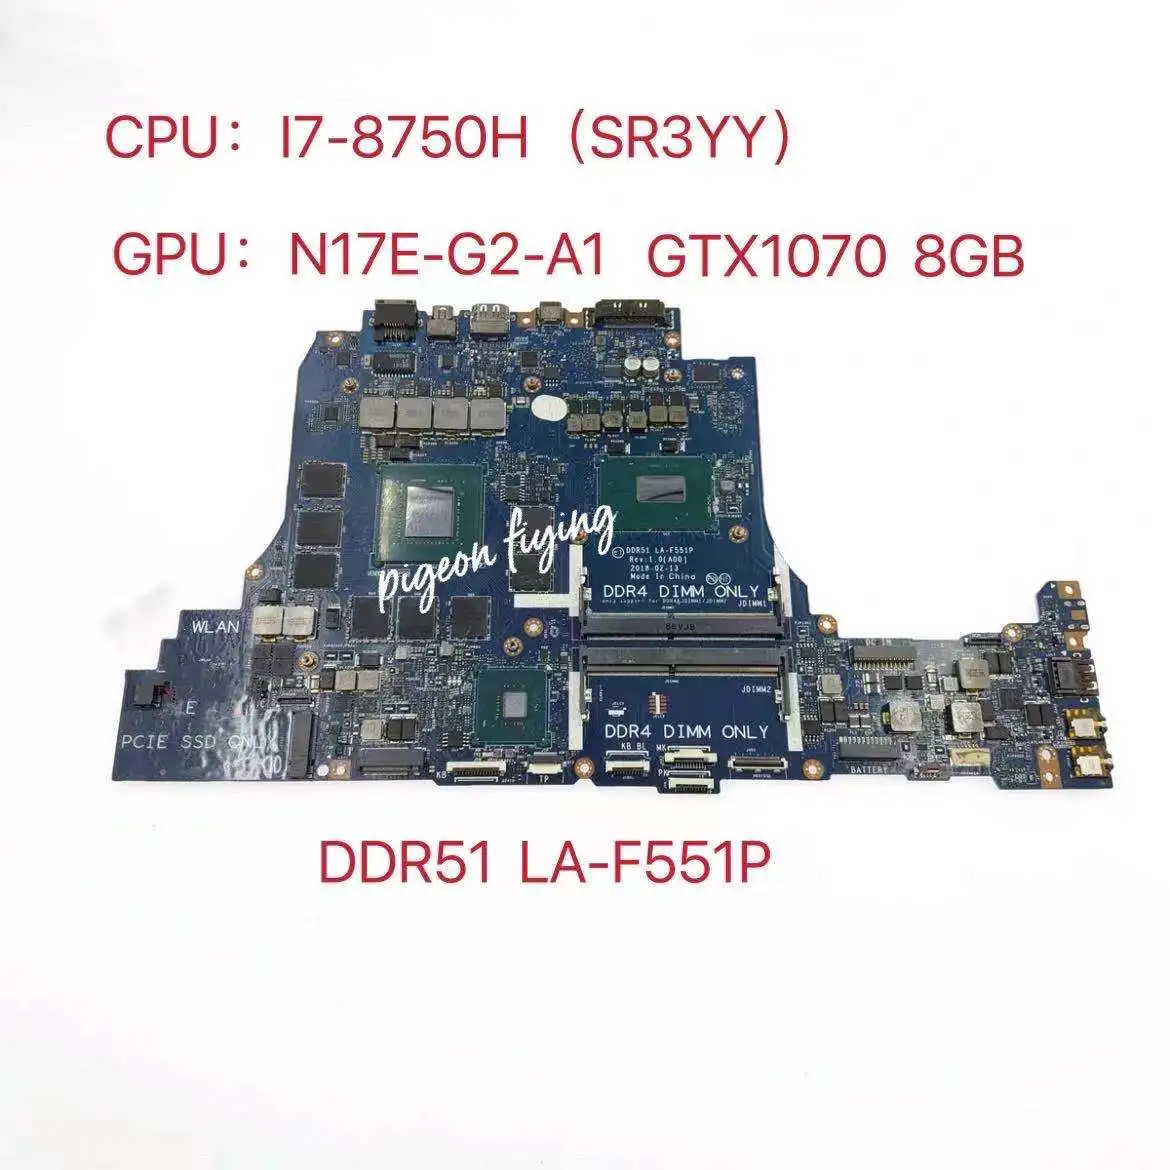 

For Para Dell Alienware 17 R5 M15 R5 Laptop Motherboard CPU: I7-8750H SR3YY GPU:GTX1070 8G CN-0D3R1D 0D3R1D D3R1D DDR51 LA-F551P